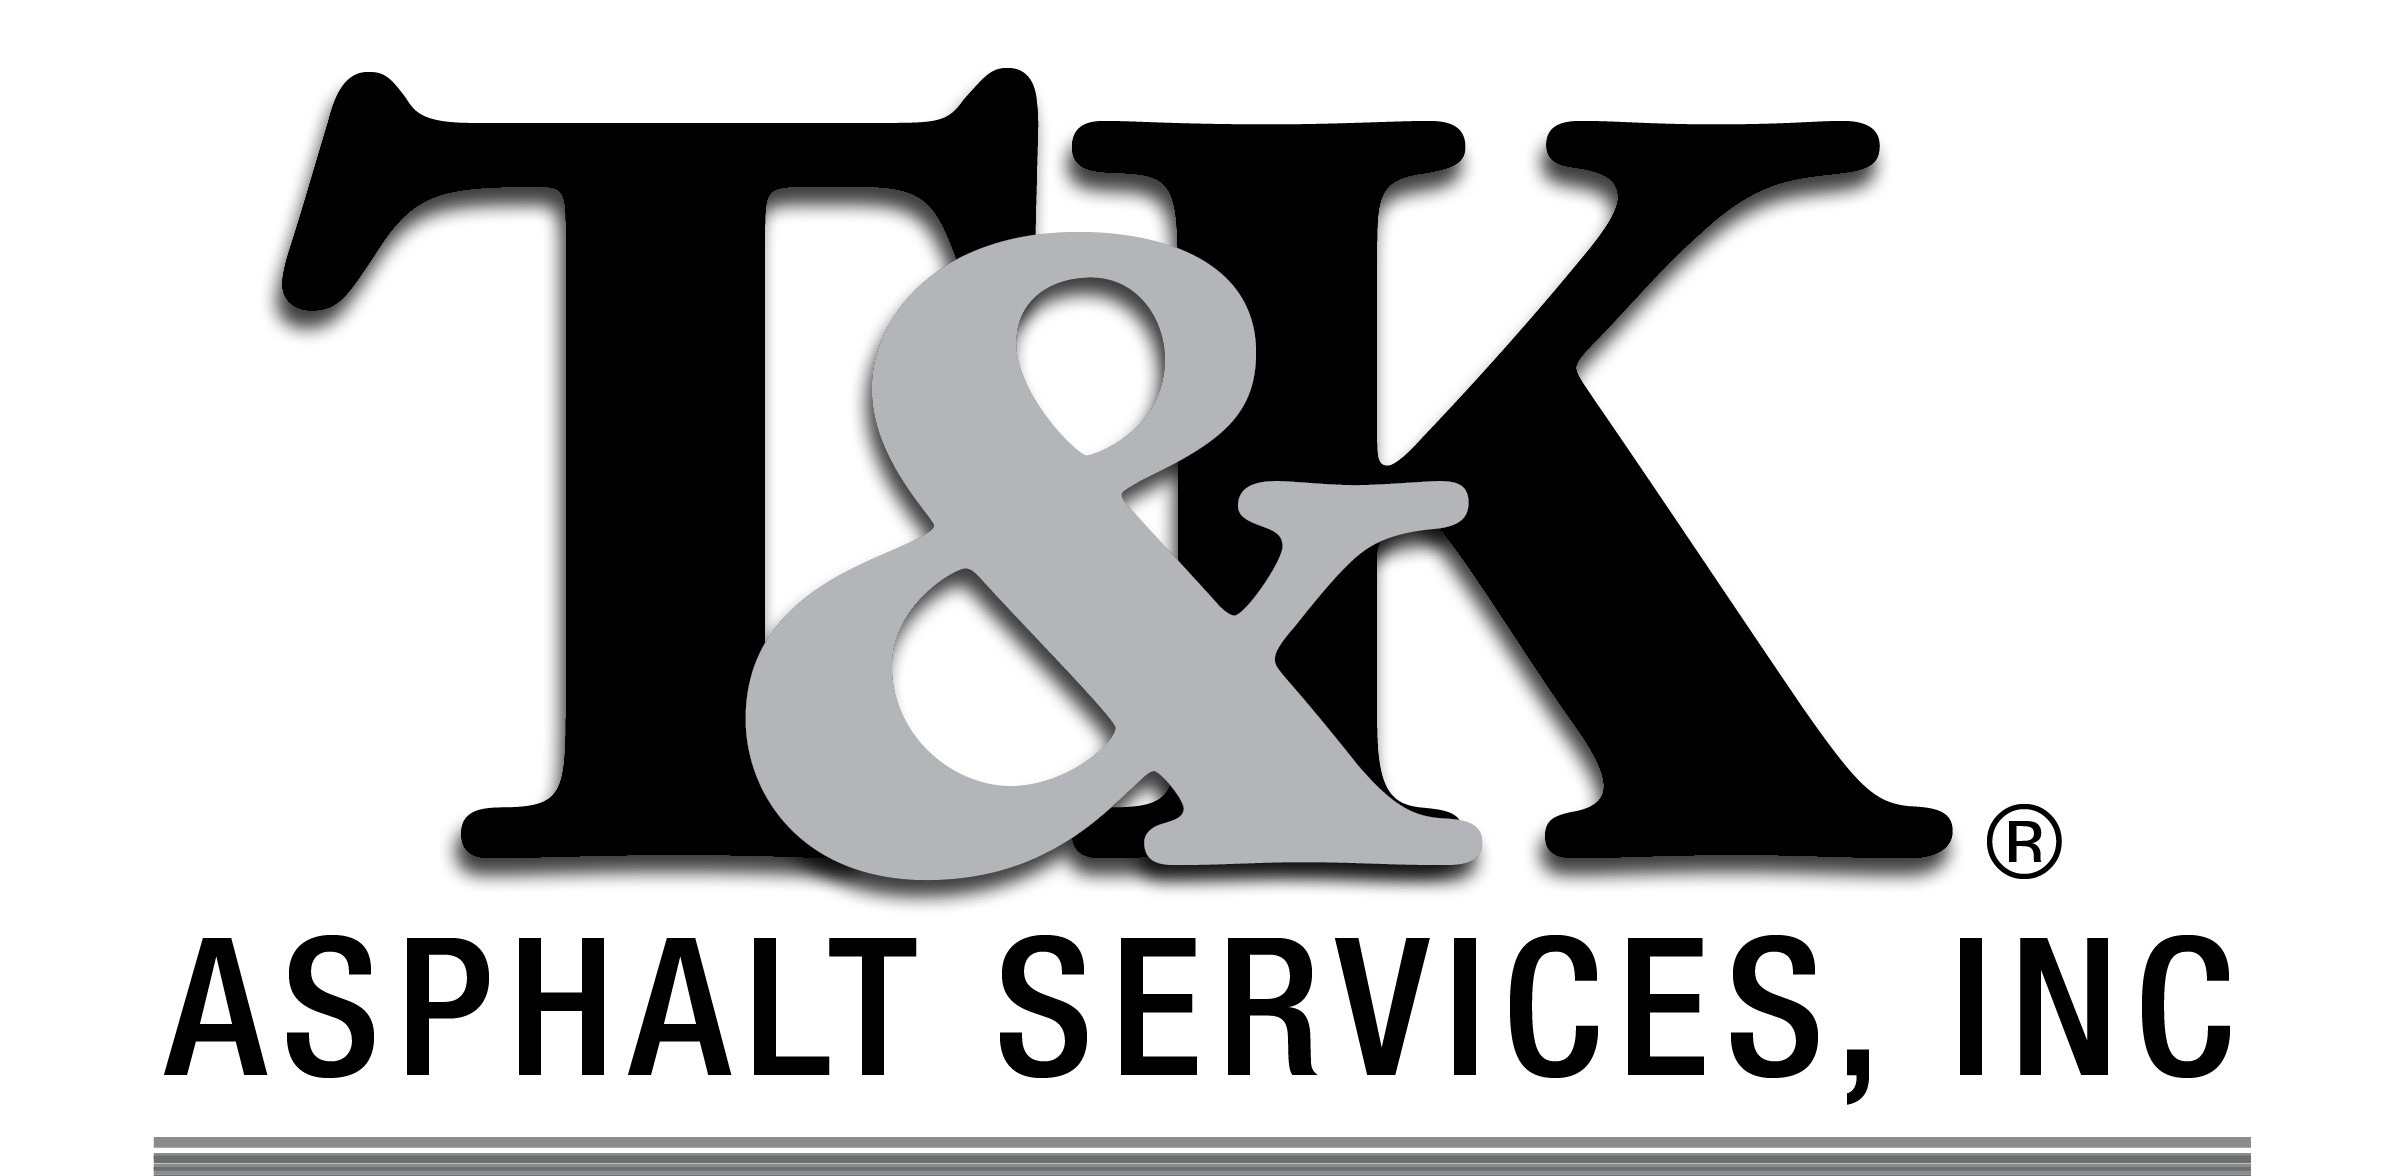 T & K Asphalt Services, Inc. logo